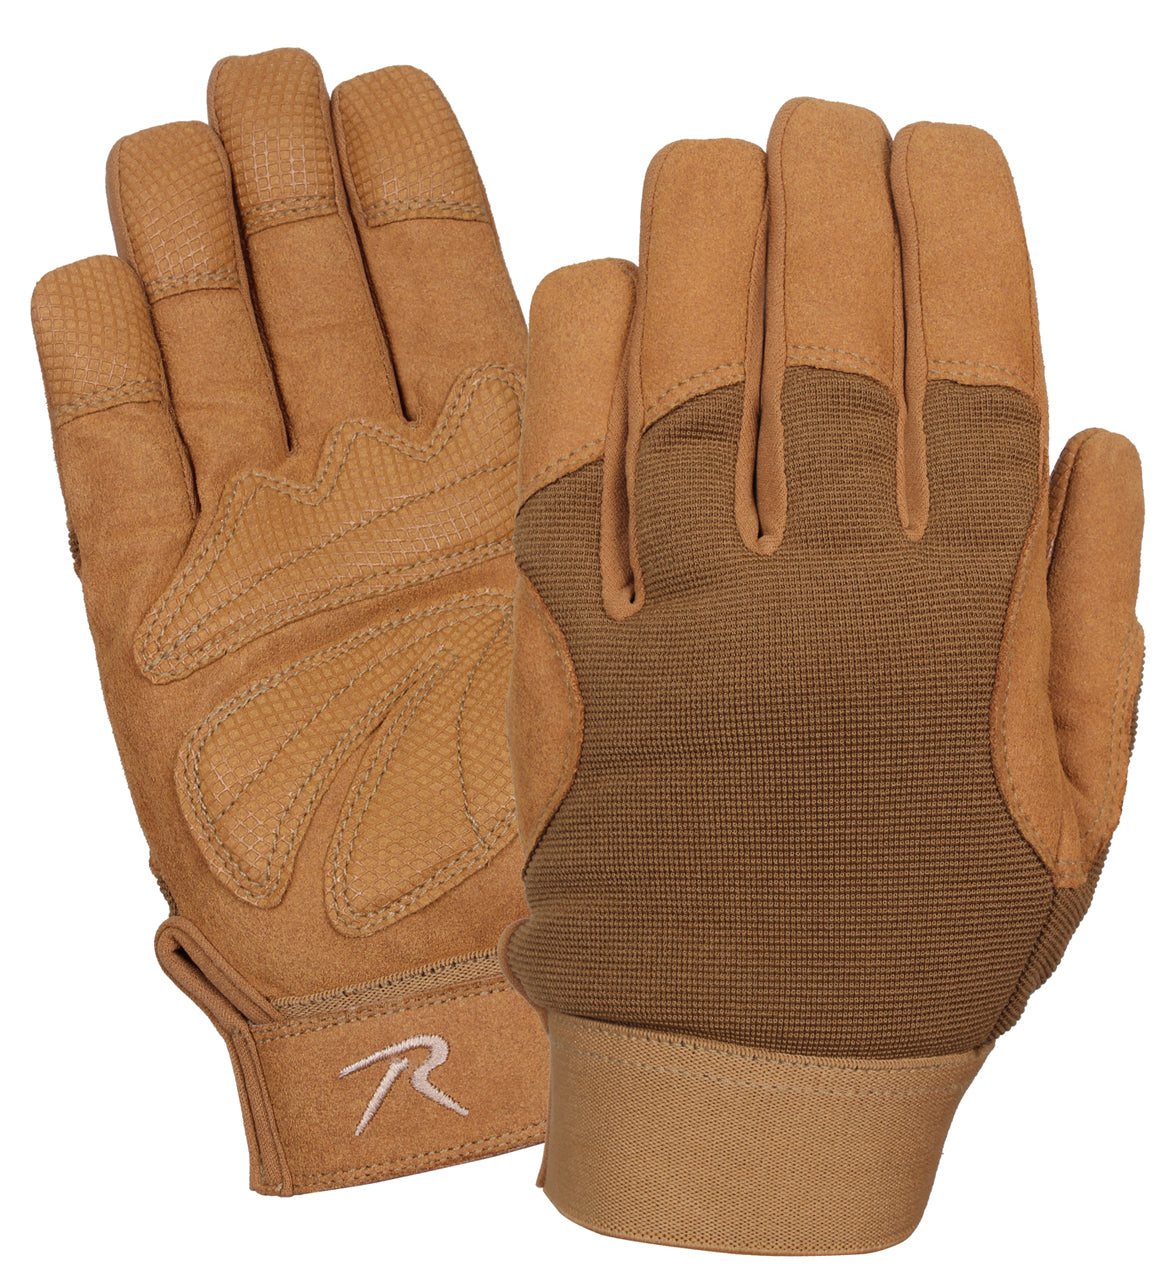 Milspec Military Mechanics Gloves Work Gloves MilTac Tactical Military Outdoor Gear Australia